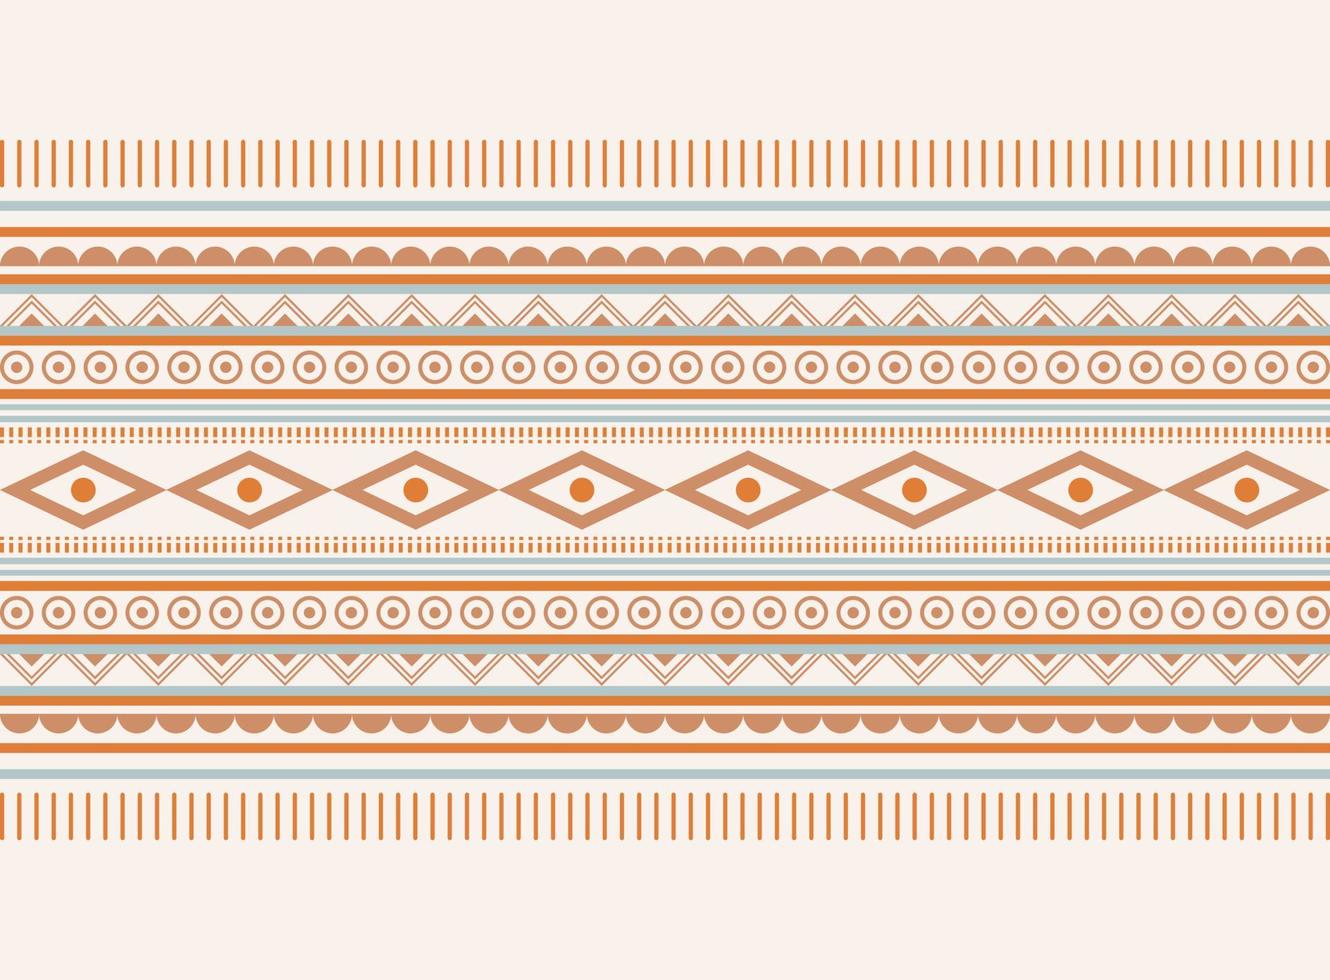 geometrisk etnisk orientalisk mönster bakgrund. mönster design i boho stil. design för textur, omslag, Kläder, batik, tyg, tapet och bakgrund. mönster broderi design. vektor